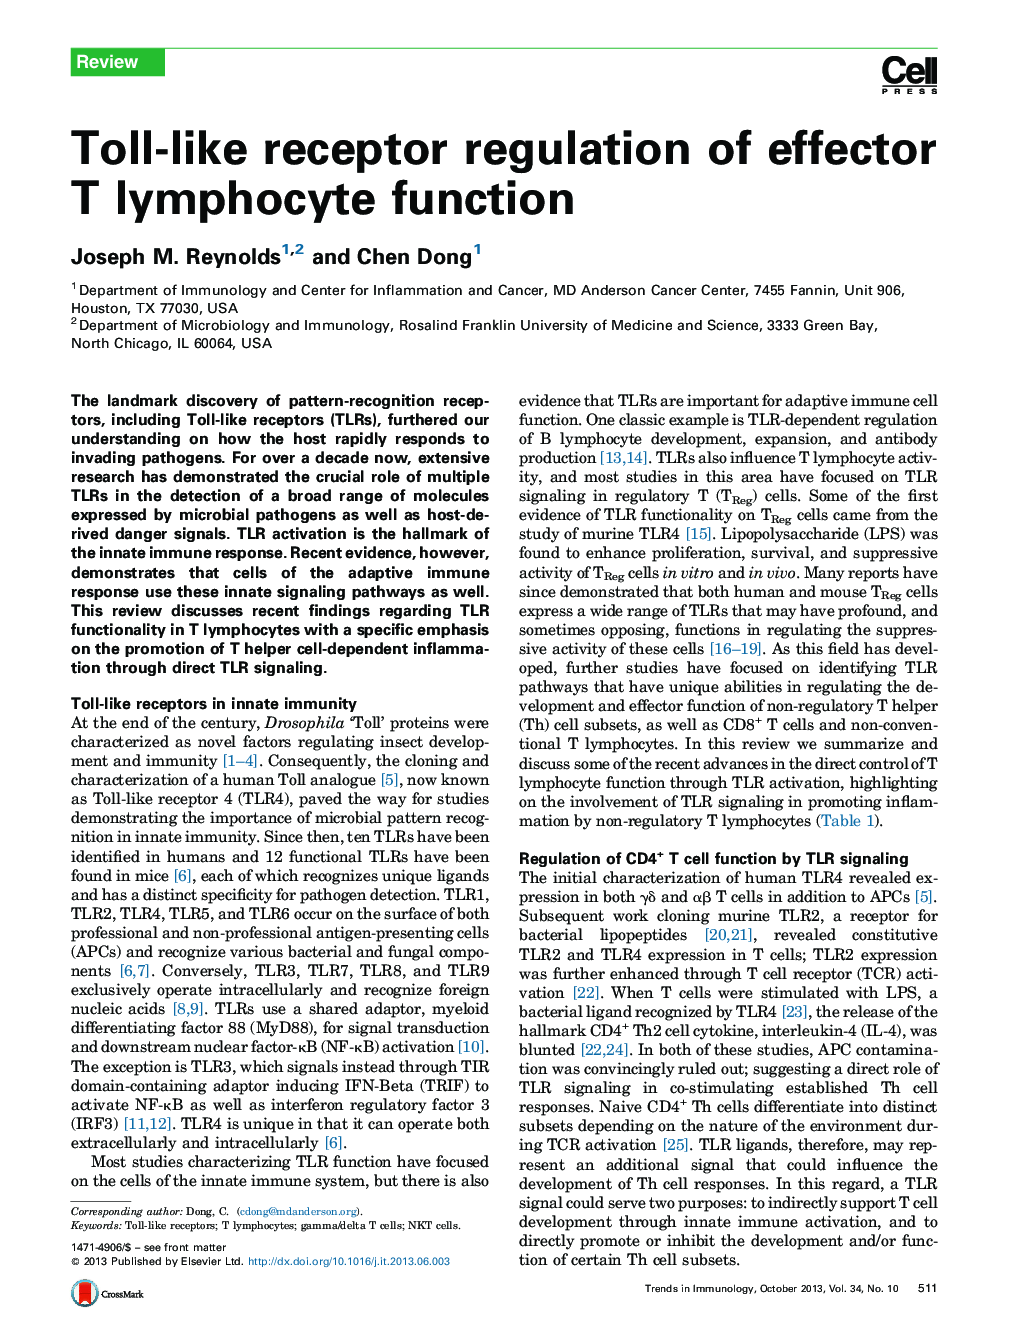 Toll-like receptor regulation of effector T lymphocyte function